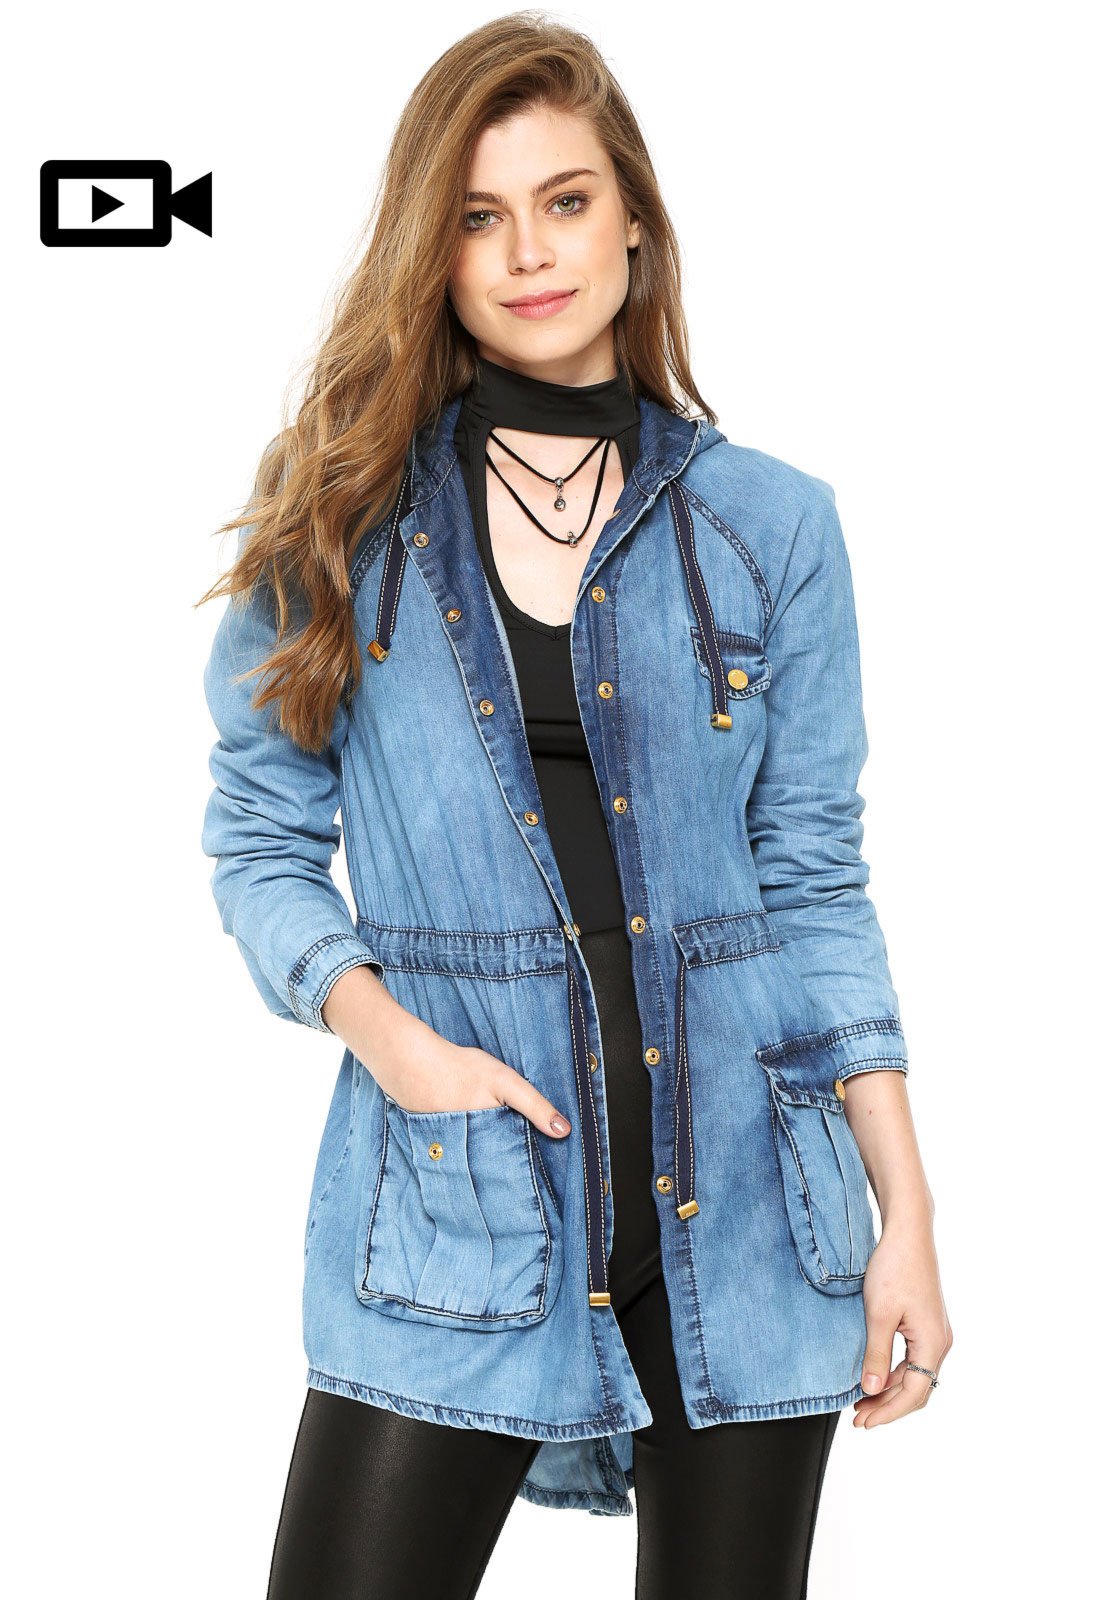 jaqueta jeans com touca feminina